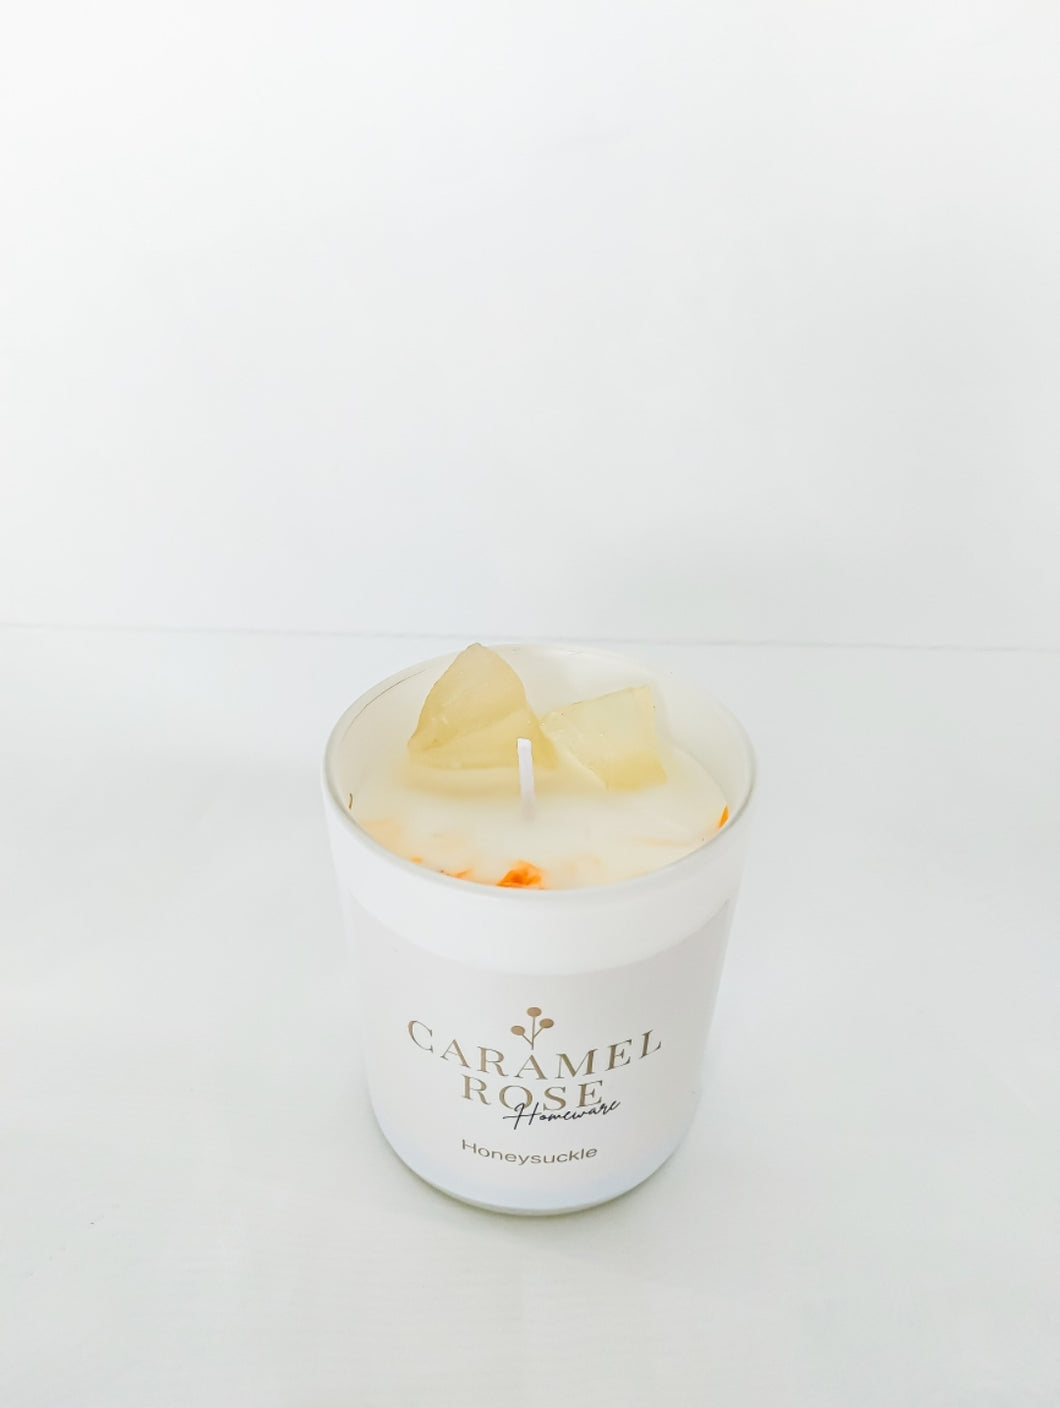 Caramel Rose Home Crystal & Botanical Candle - Honeysuckle